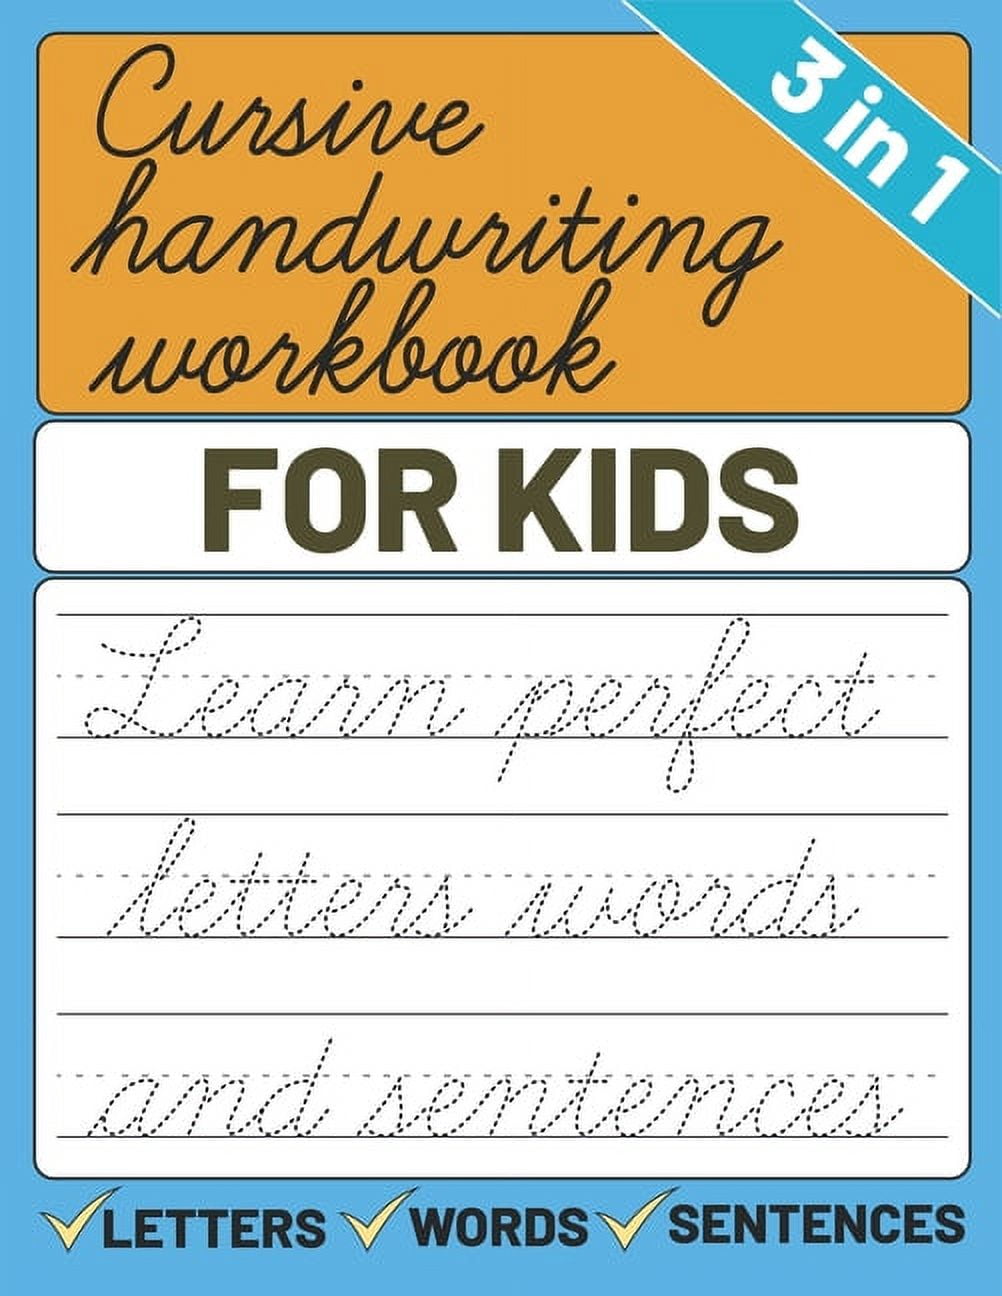 CURSIVE HANDWRITING WORKBOOK FOR KIDS, CURSIVE FOR BEGINNERS: CURSIVE  WRITING PRACTICE, Cursive LETTERS, WORDS, SENTENCES. FOR KIDS GRADES 1, 2,  3,  Ages 5-7, 8-12!!! 140 PAGES of PRACTICE. by T.M. Hazel